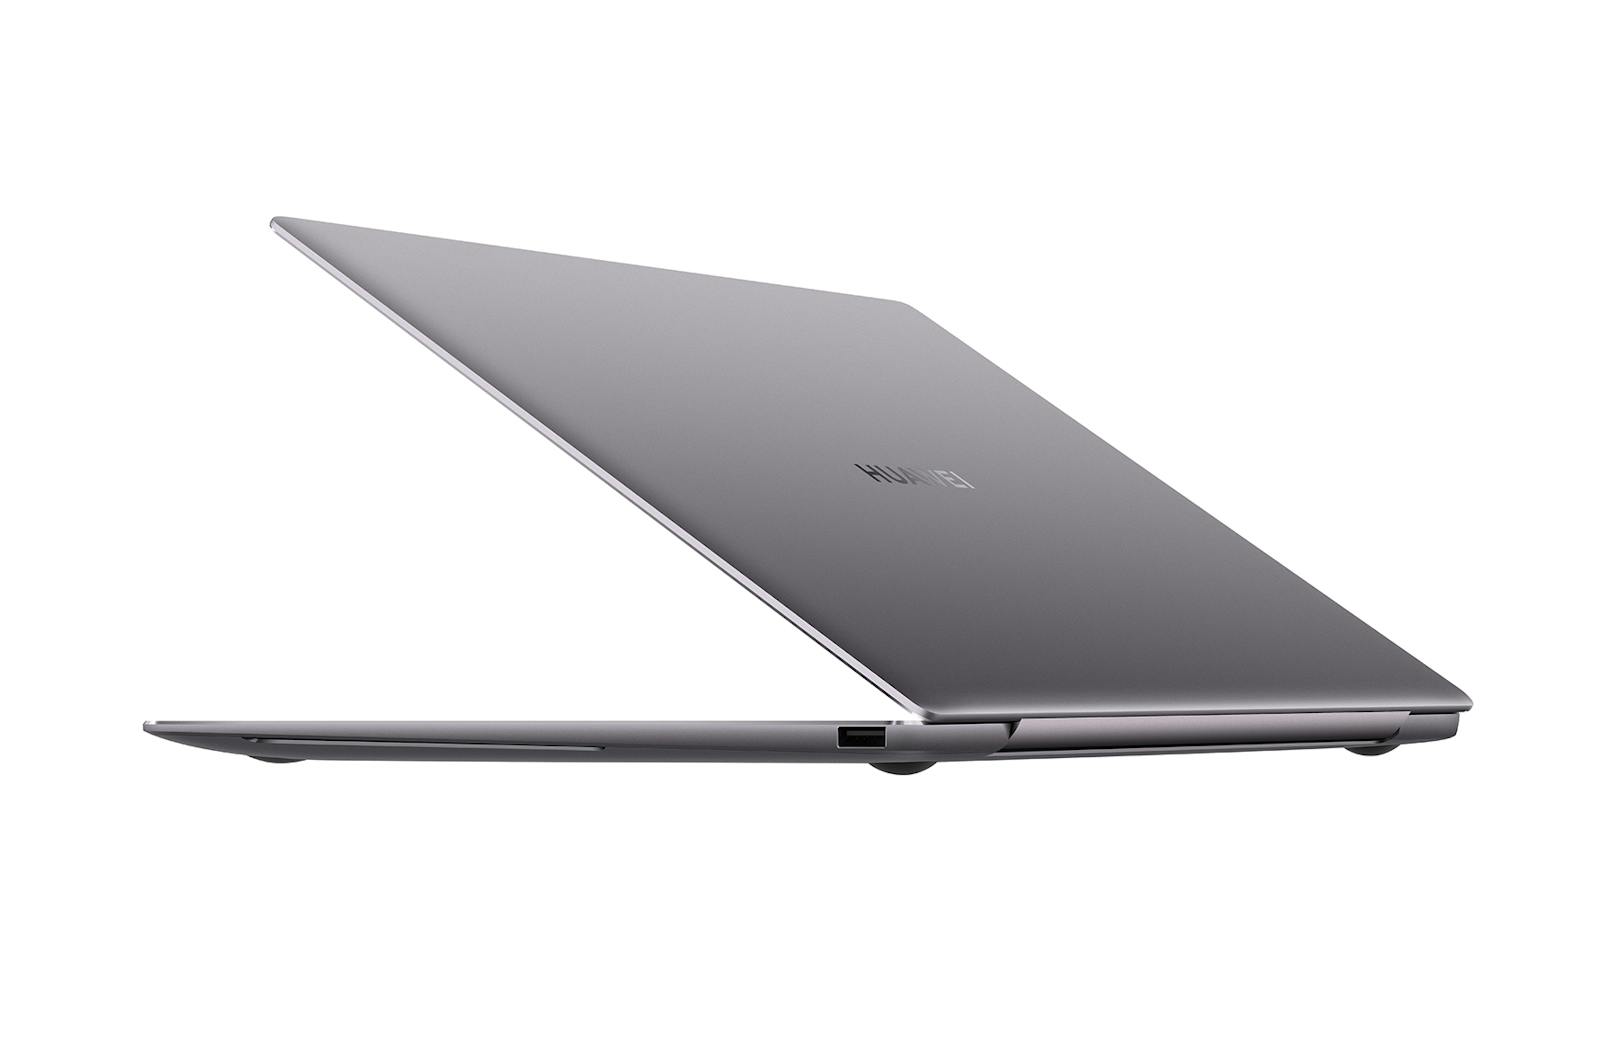 Huawei MateBook X Pro: Design in Space Grey